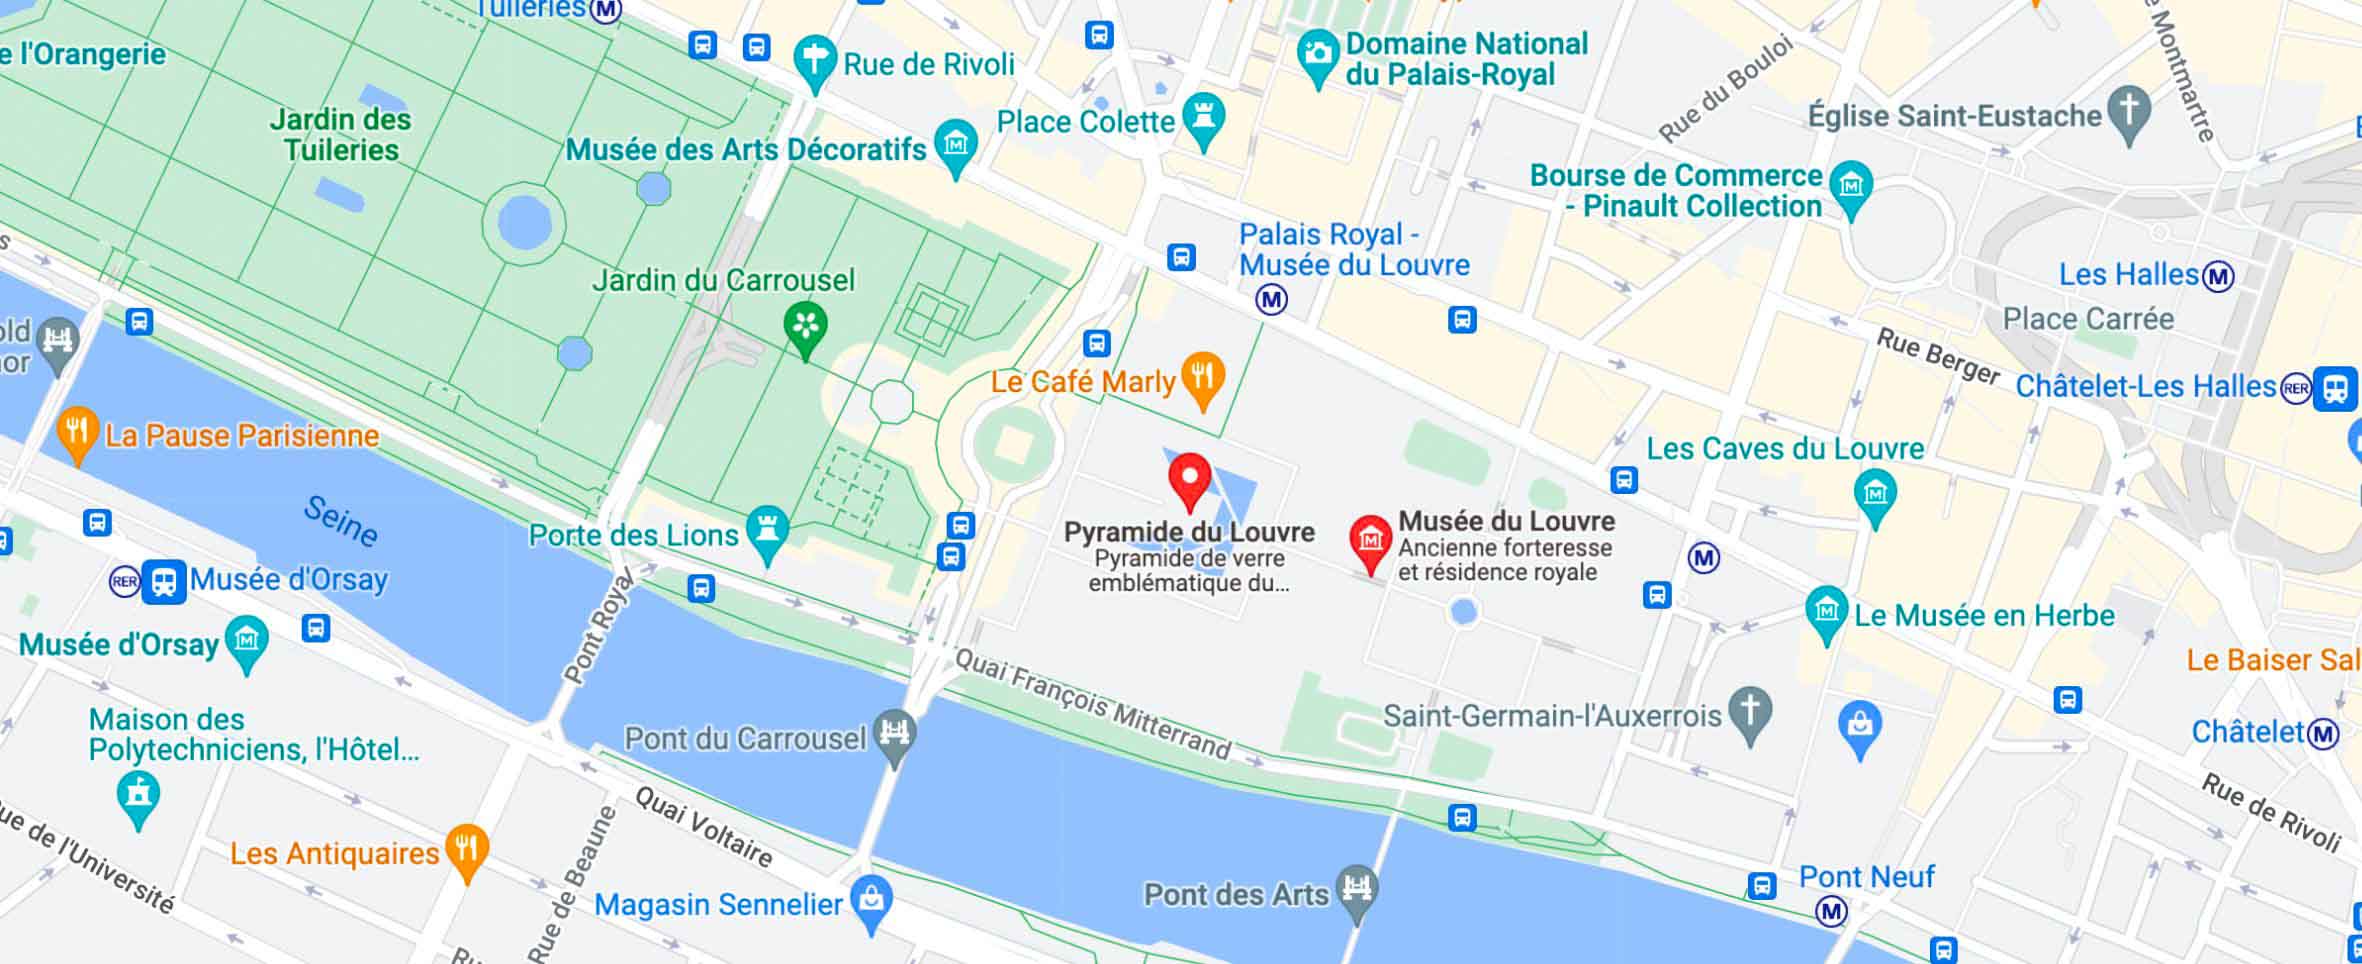 Mapa para llegar al Louvre